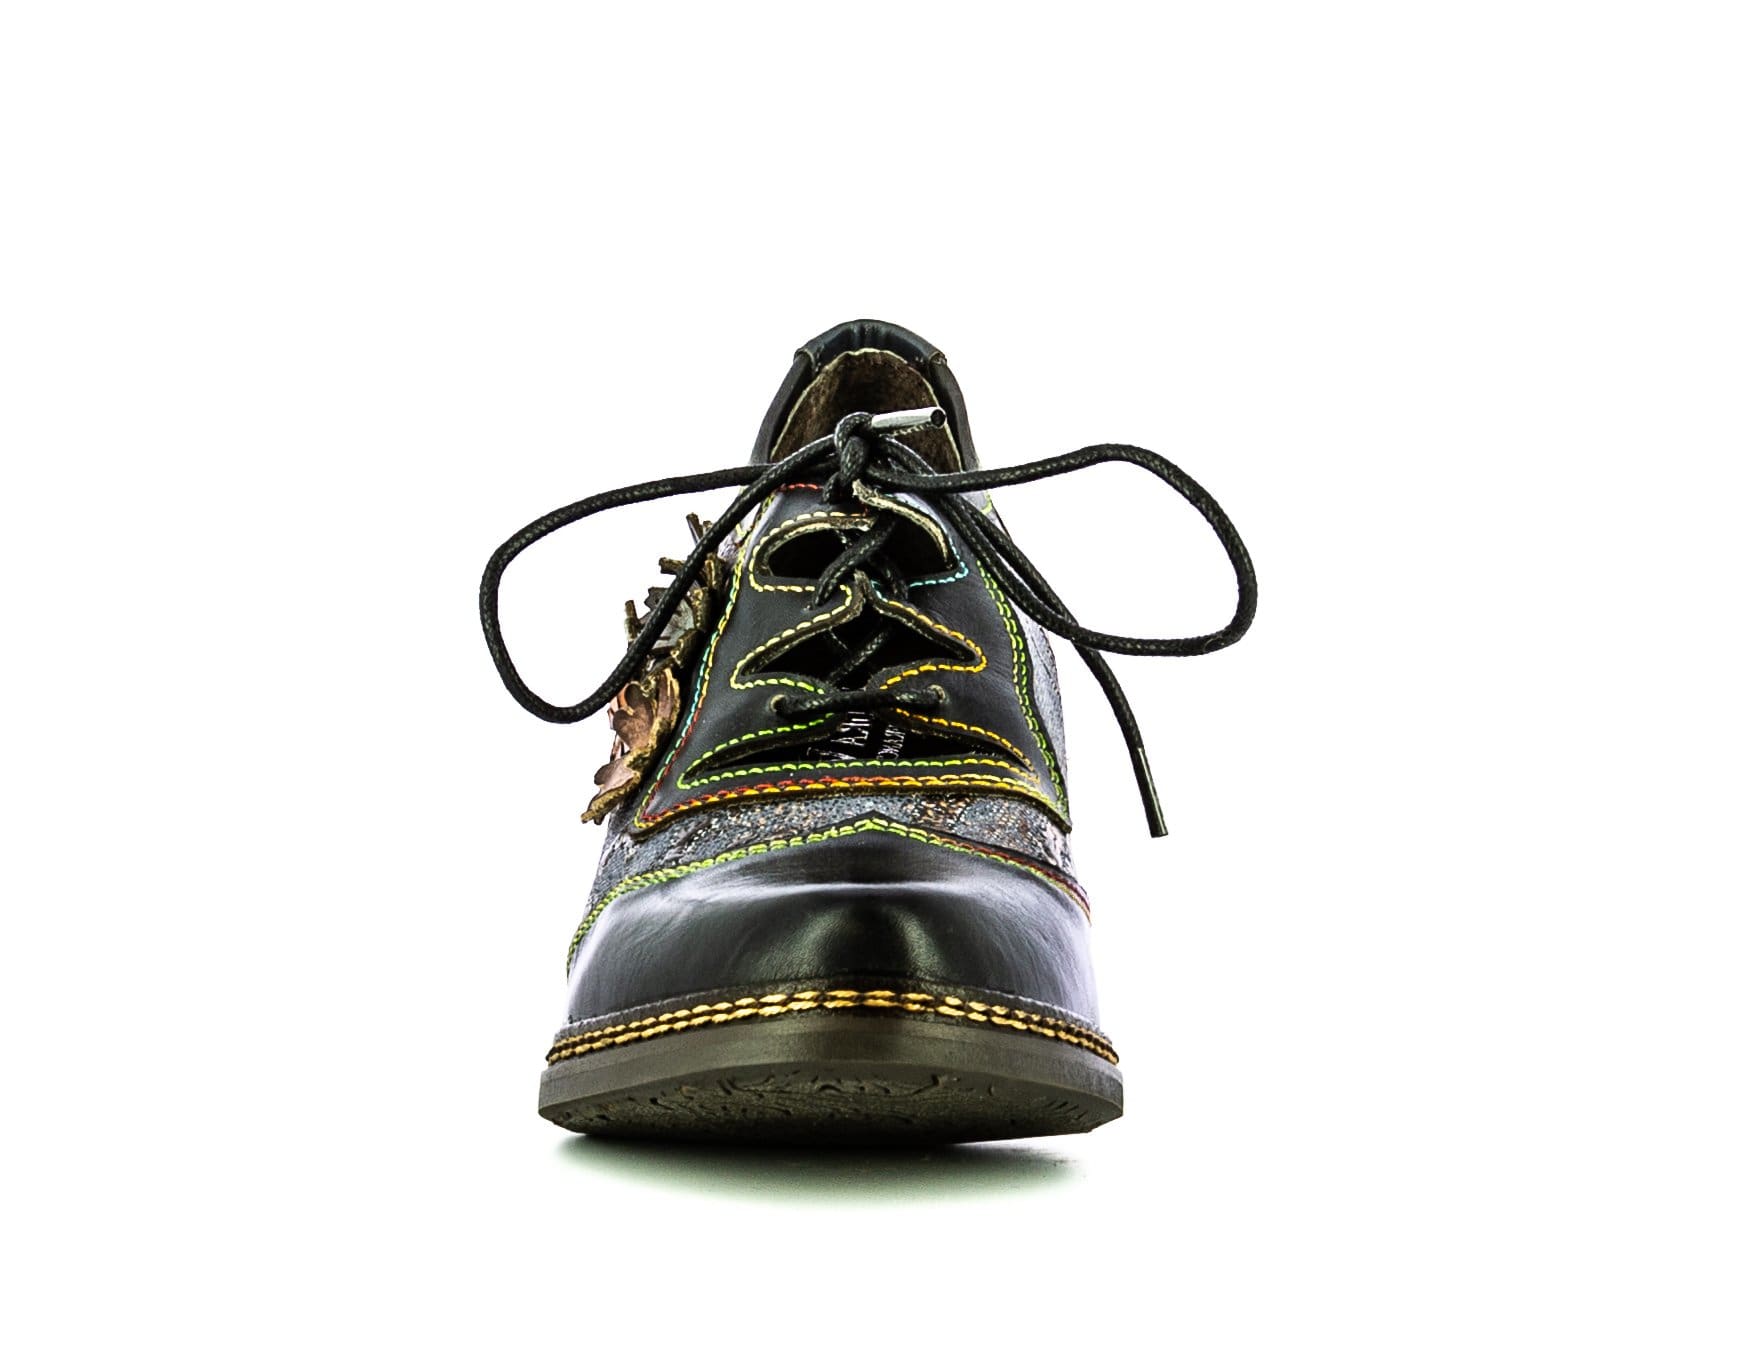 Shoe AGCATHEO 91 - Court shoe